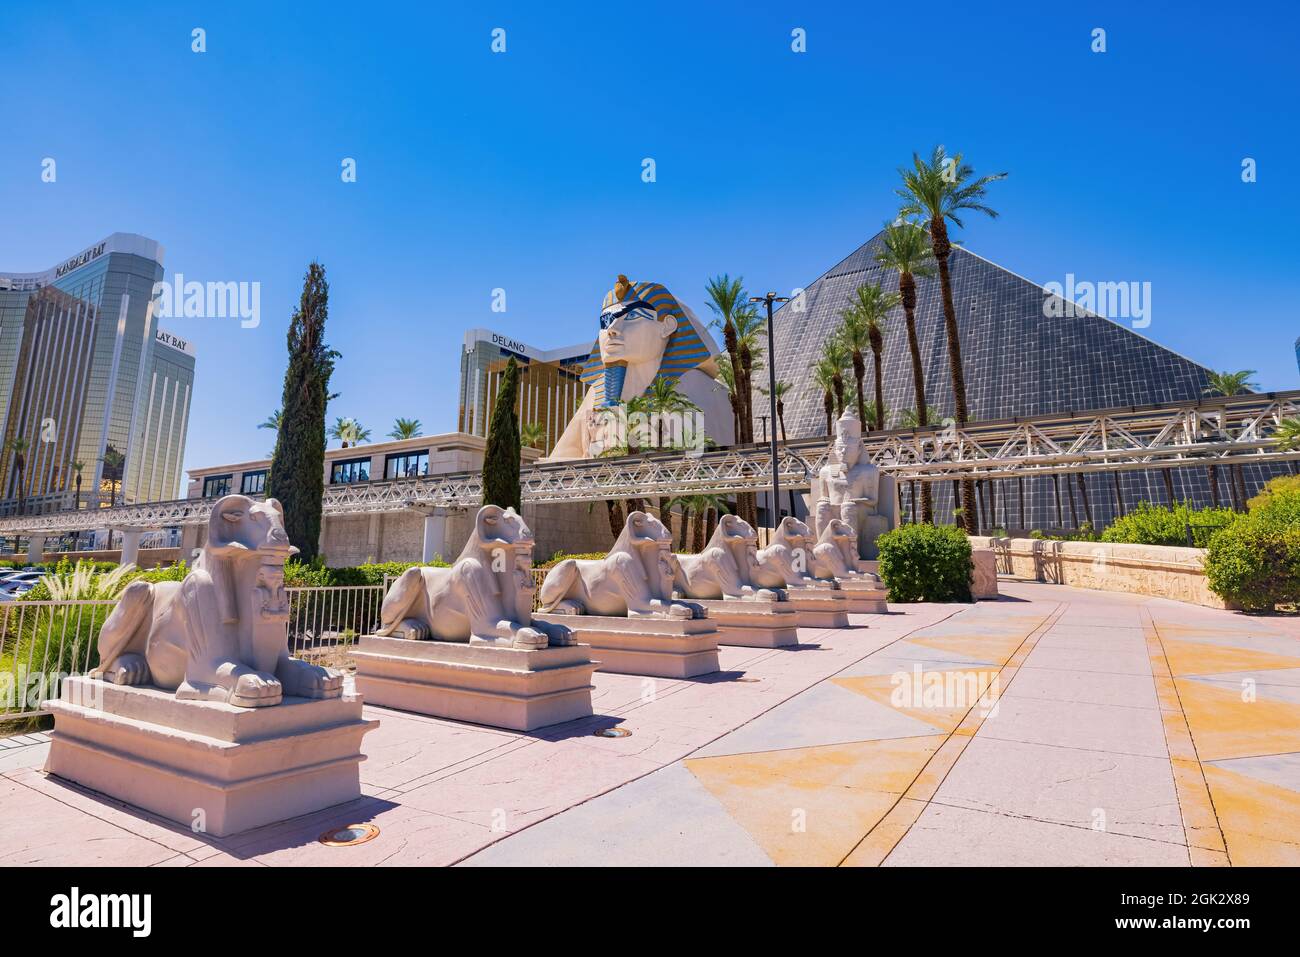 Las Vegas, SEP 12, 2021 - Raiders eye patch on the Sphinx of Luxor Casino Stock Photo